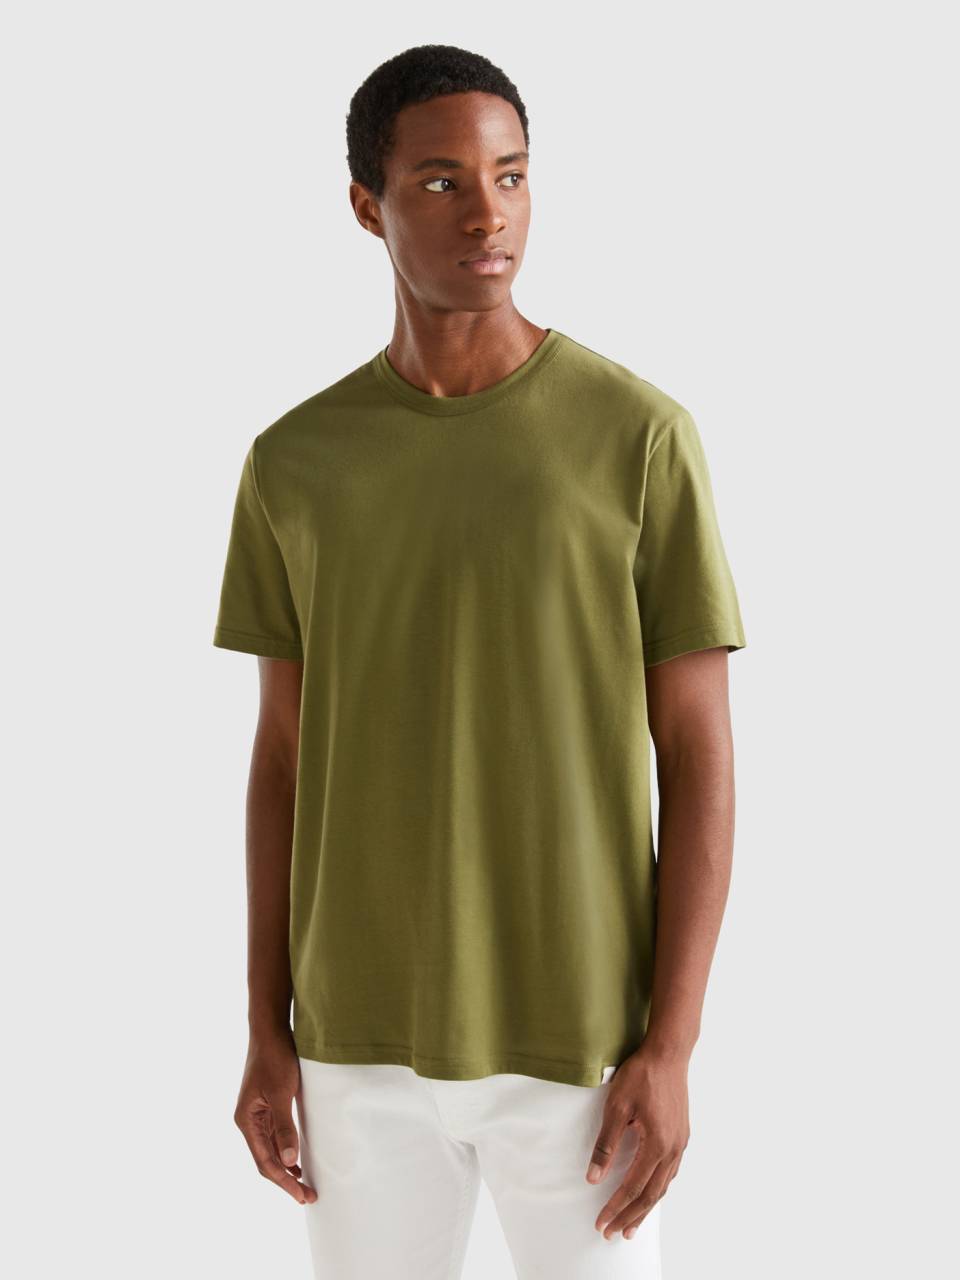 T-shirt in warm cotton - Green Military Benetton 